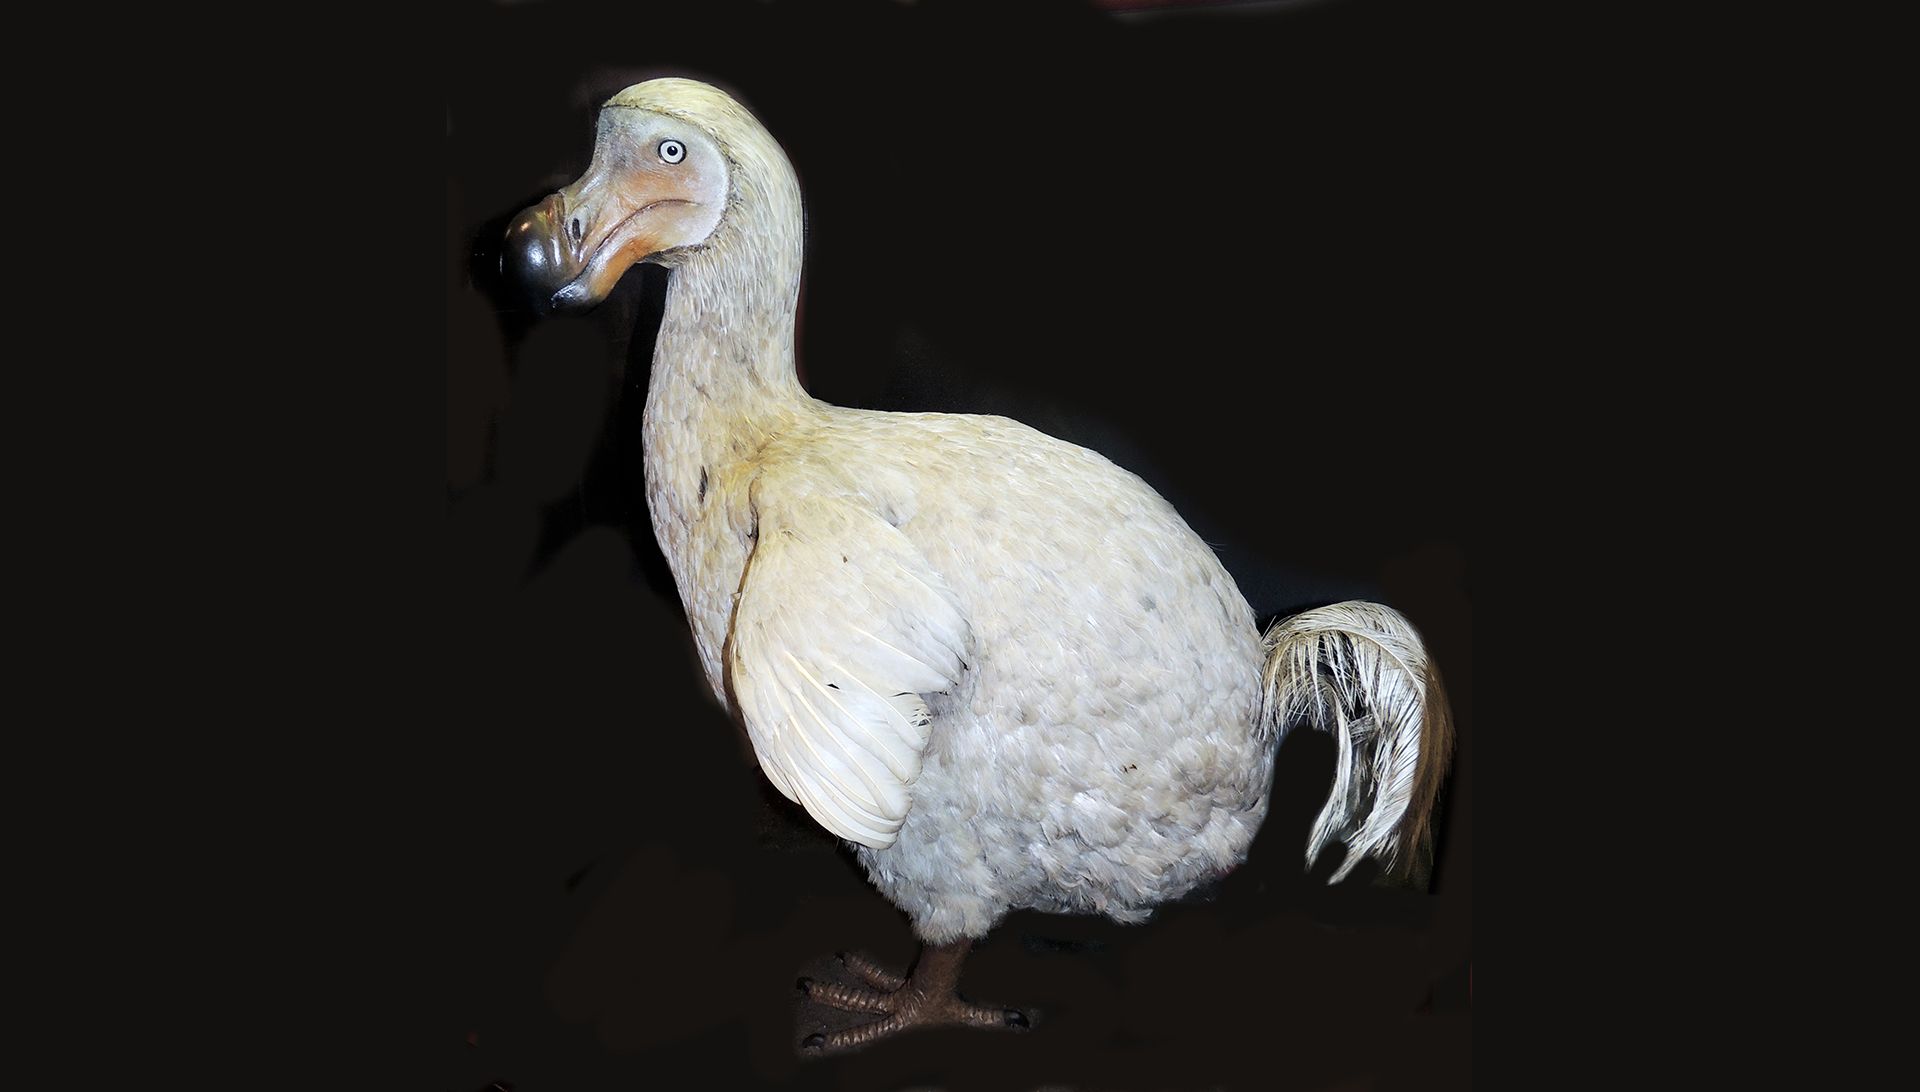 додо птица фото википедия